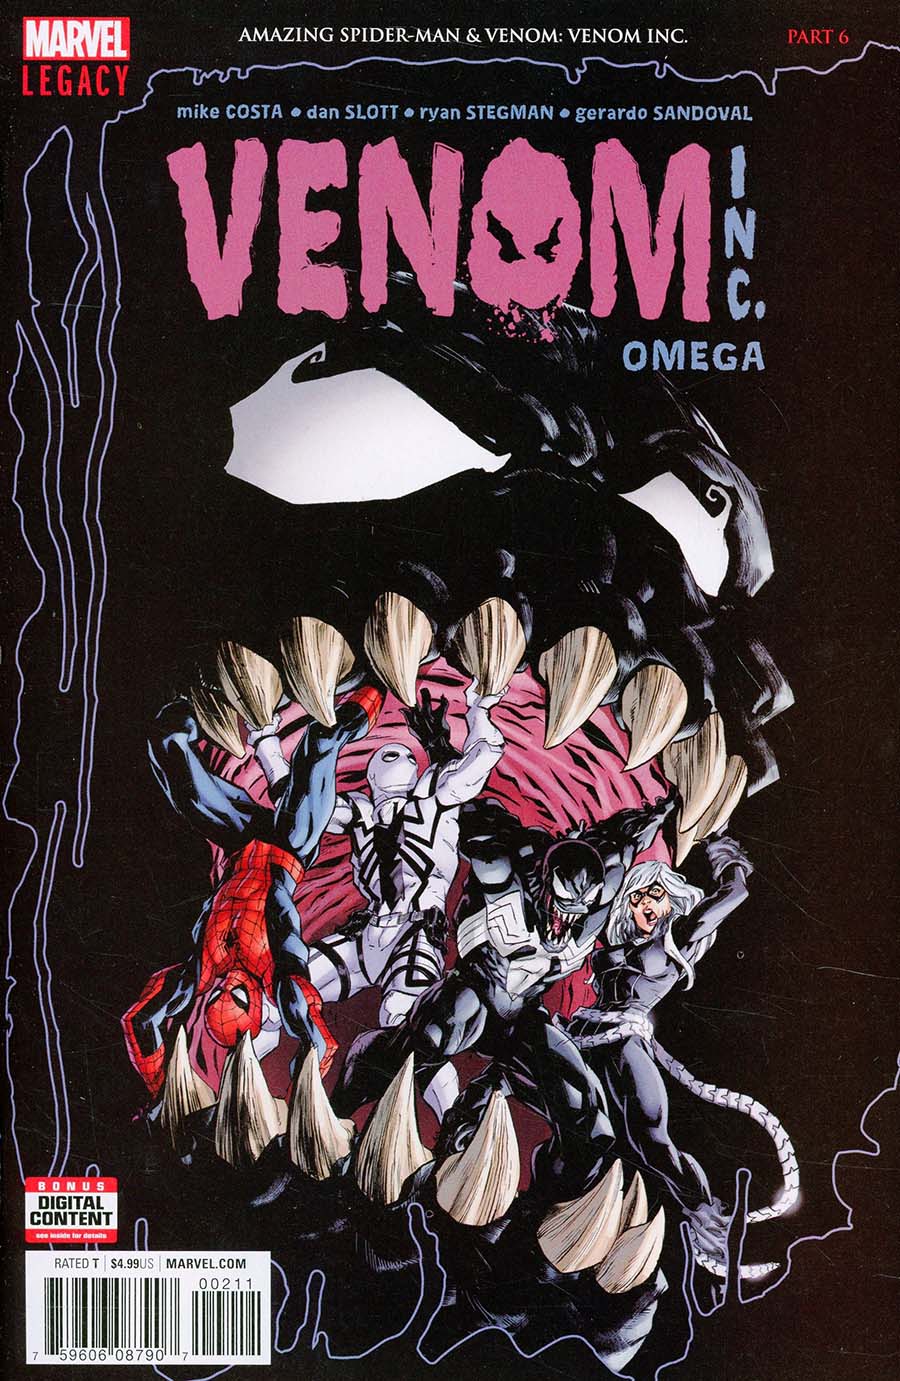 Amazing Spider-Man Venom Venom Inc Omega #1 Cover A Regular Ryan Stegman Cover (Venom Inc Part 6)(Marvel Legacy Tie-In)